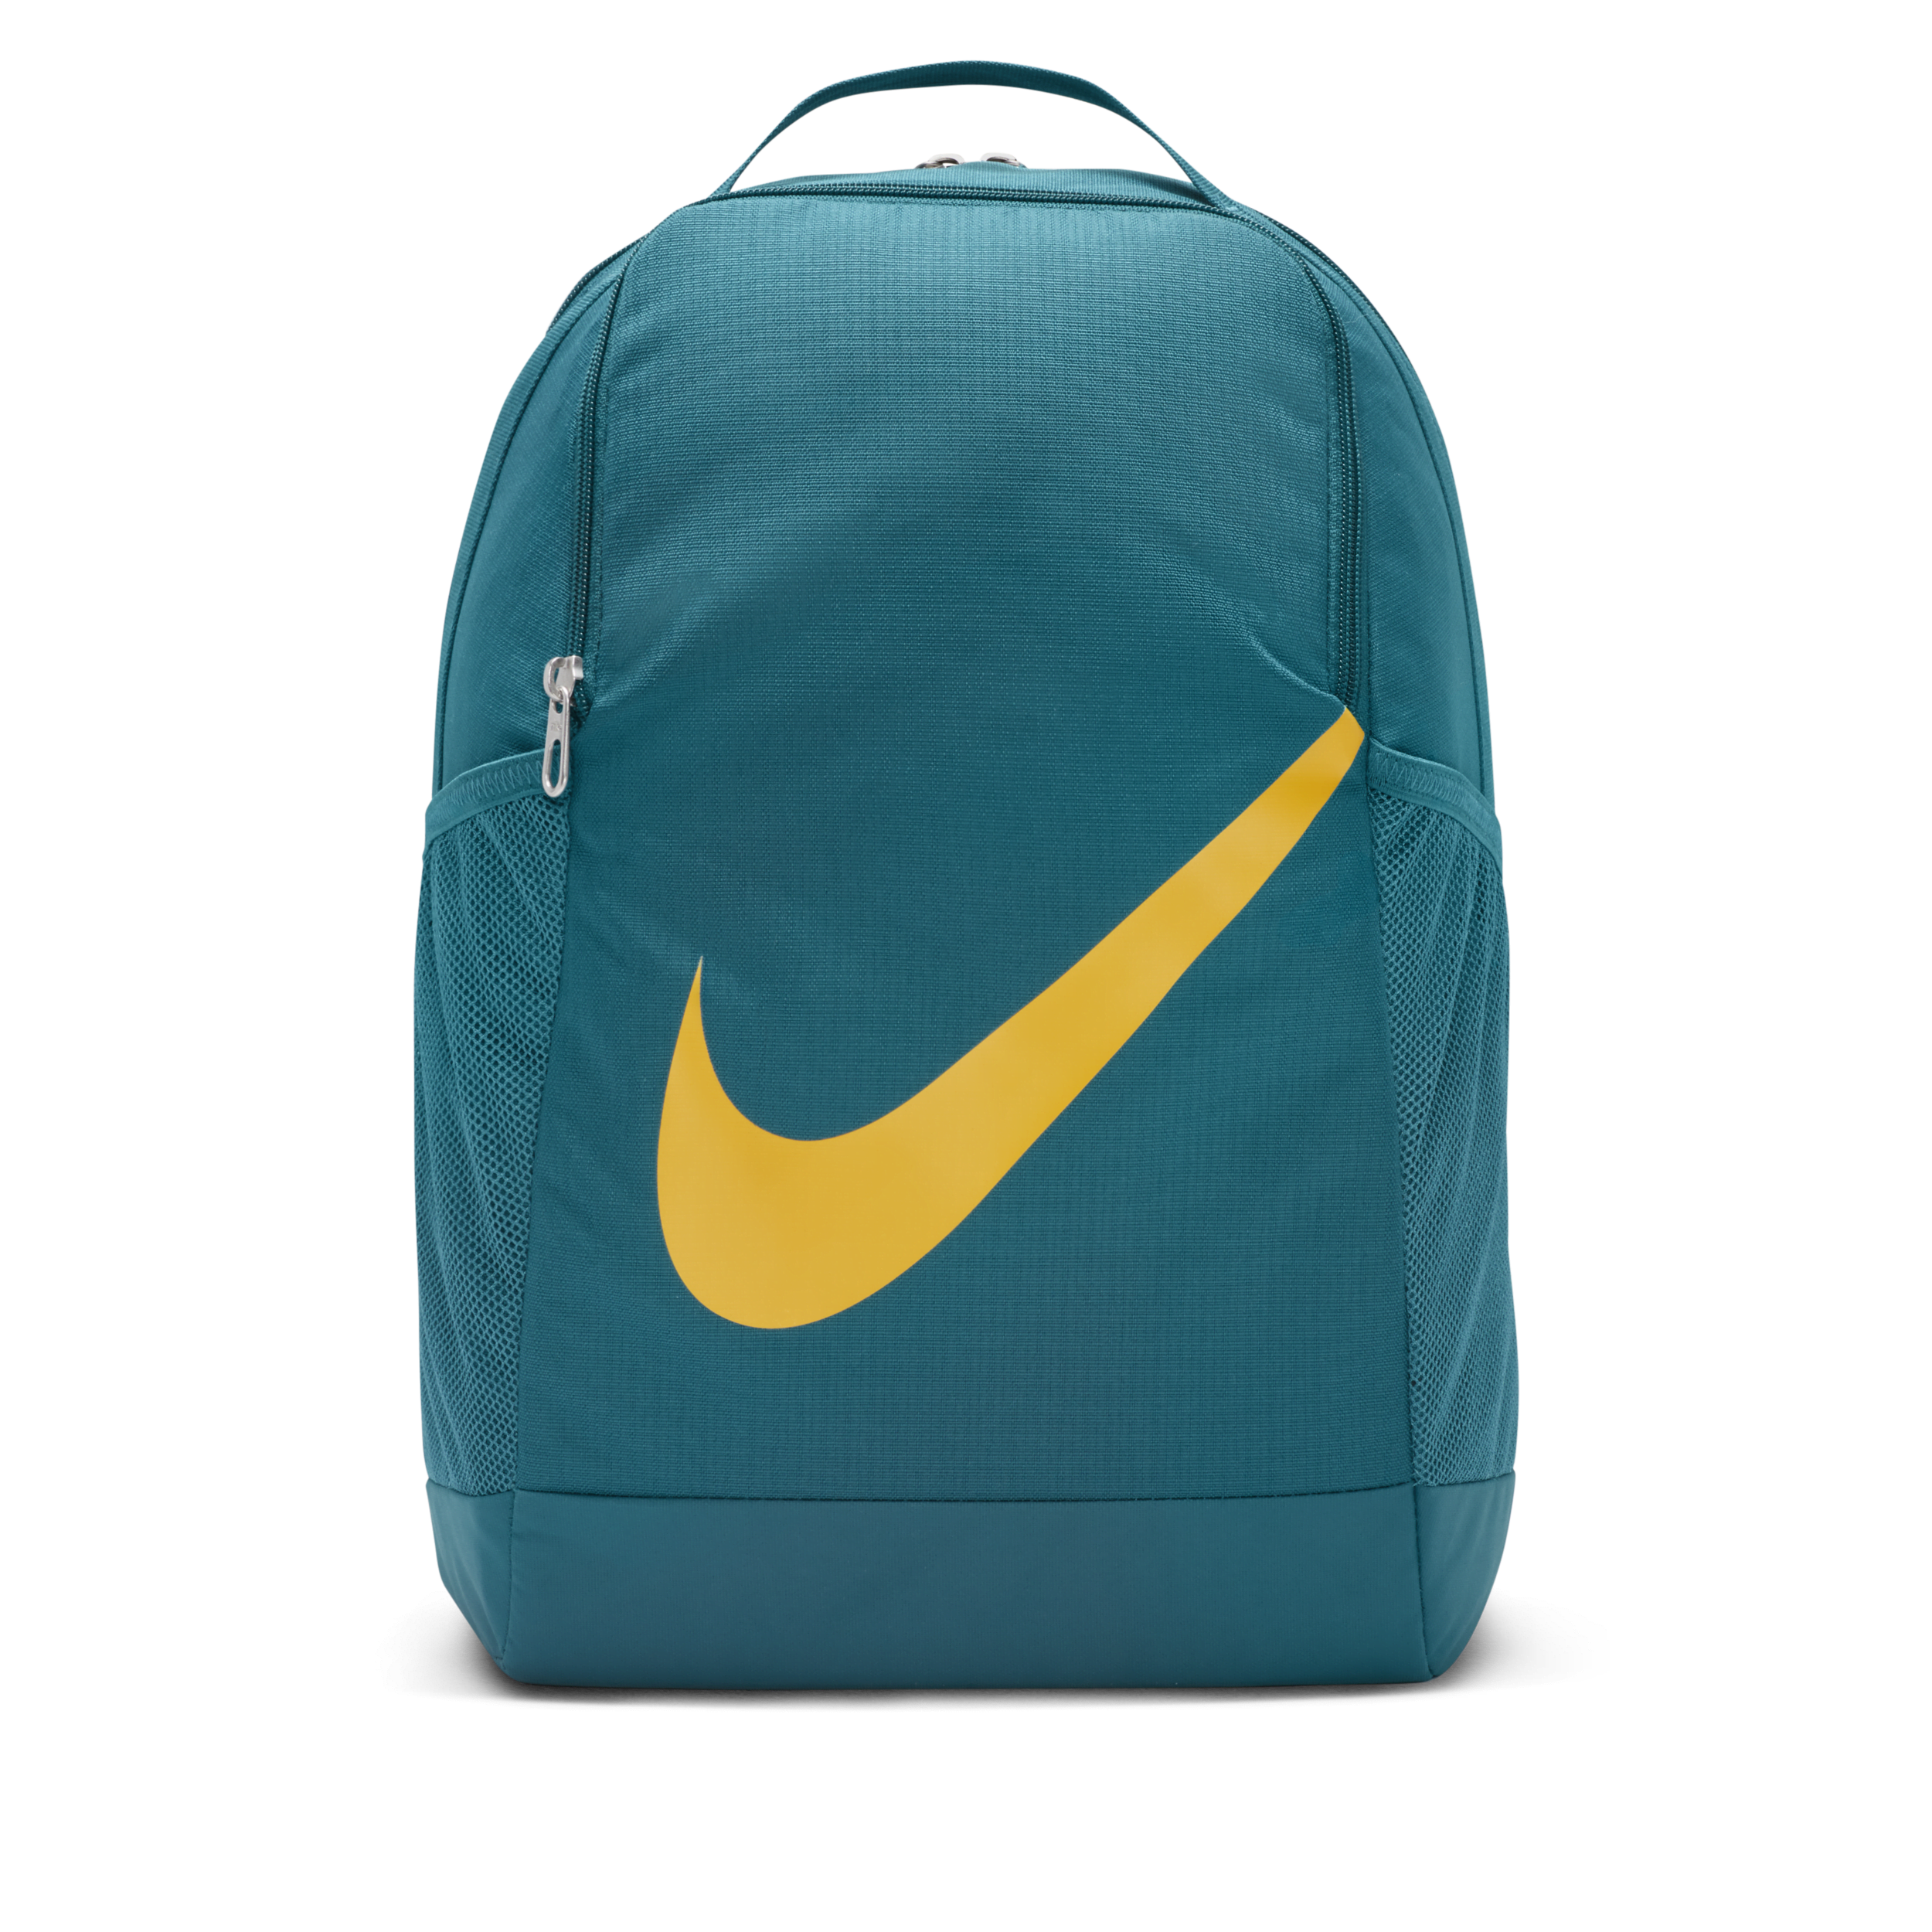 Nike Brasilia Medium Training Backpack, Nike Backpack for Women and Me–  backpacks4less.com